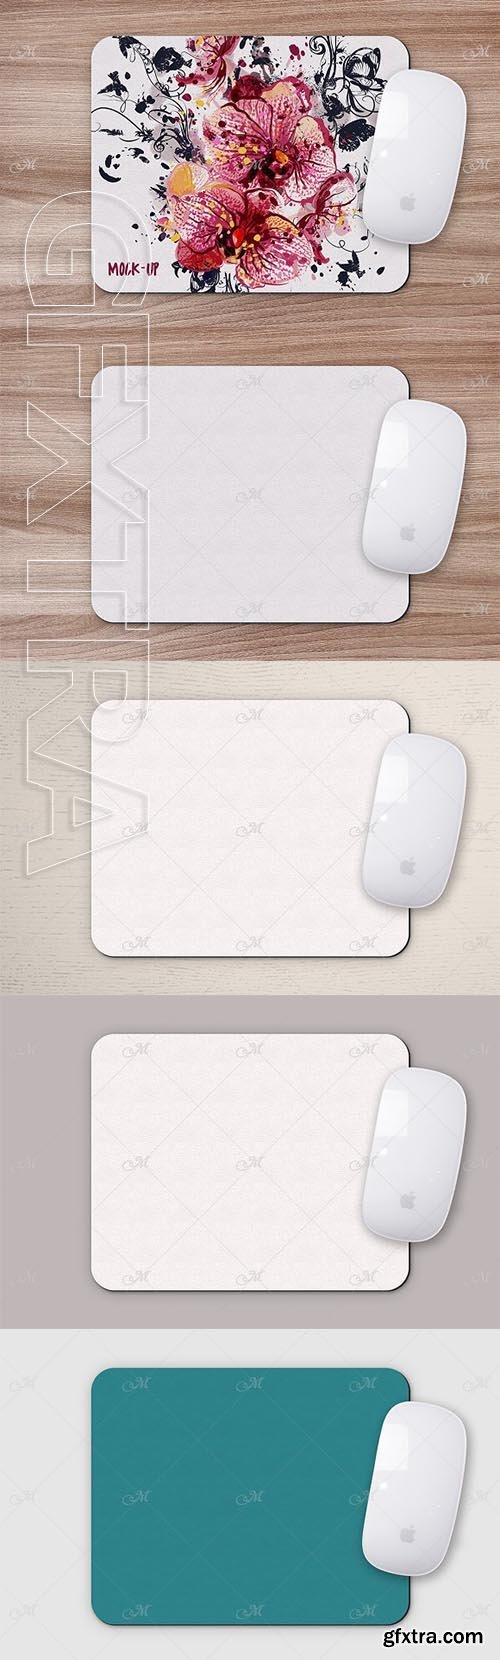 Mouse Pad Mock-up PSD Smart Object